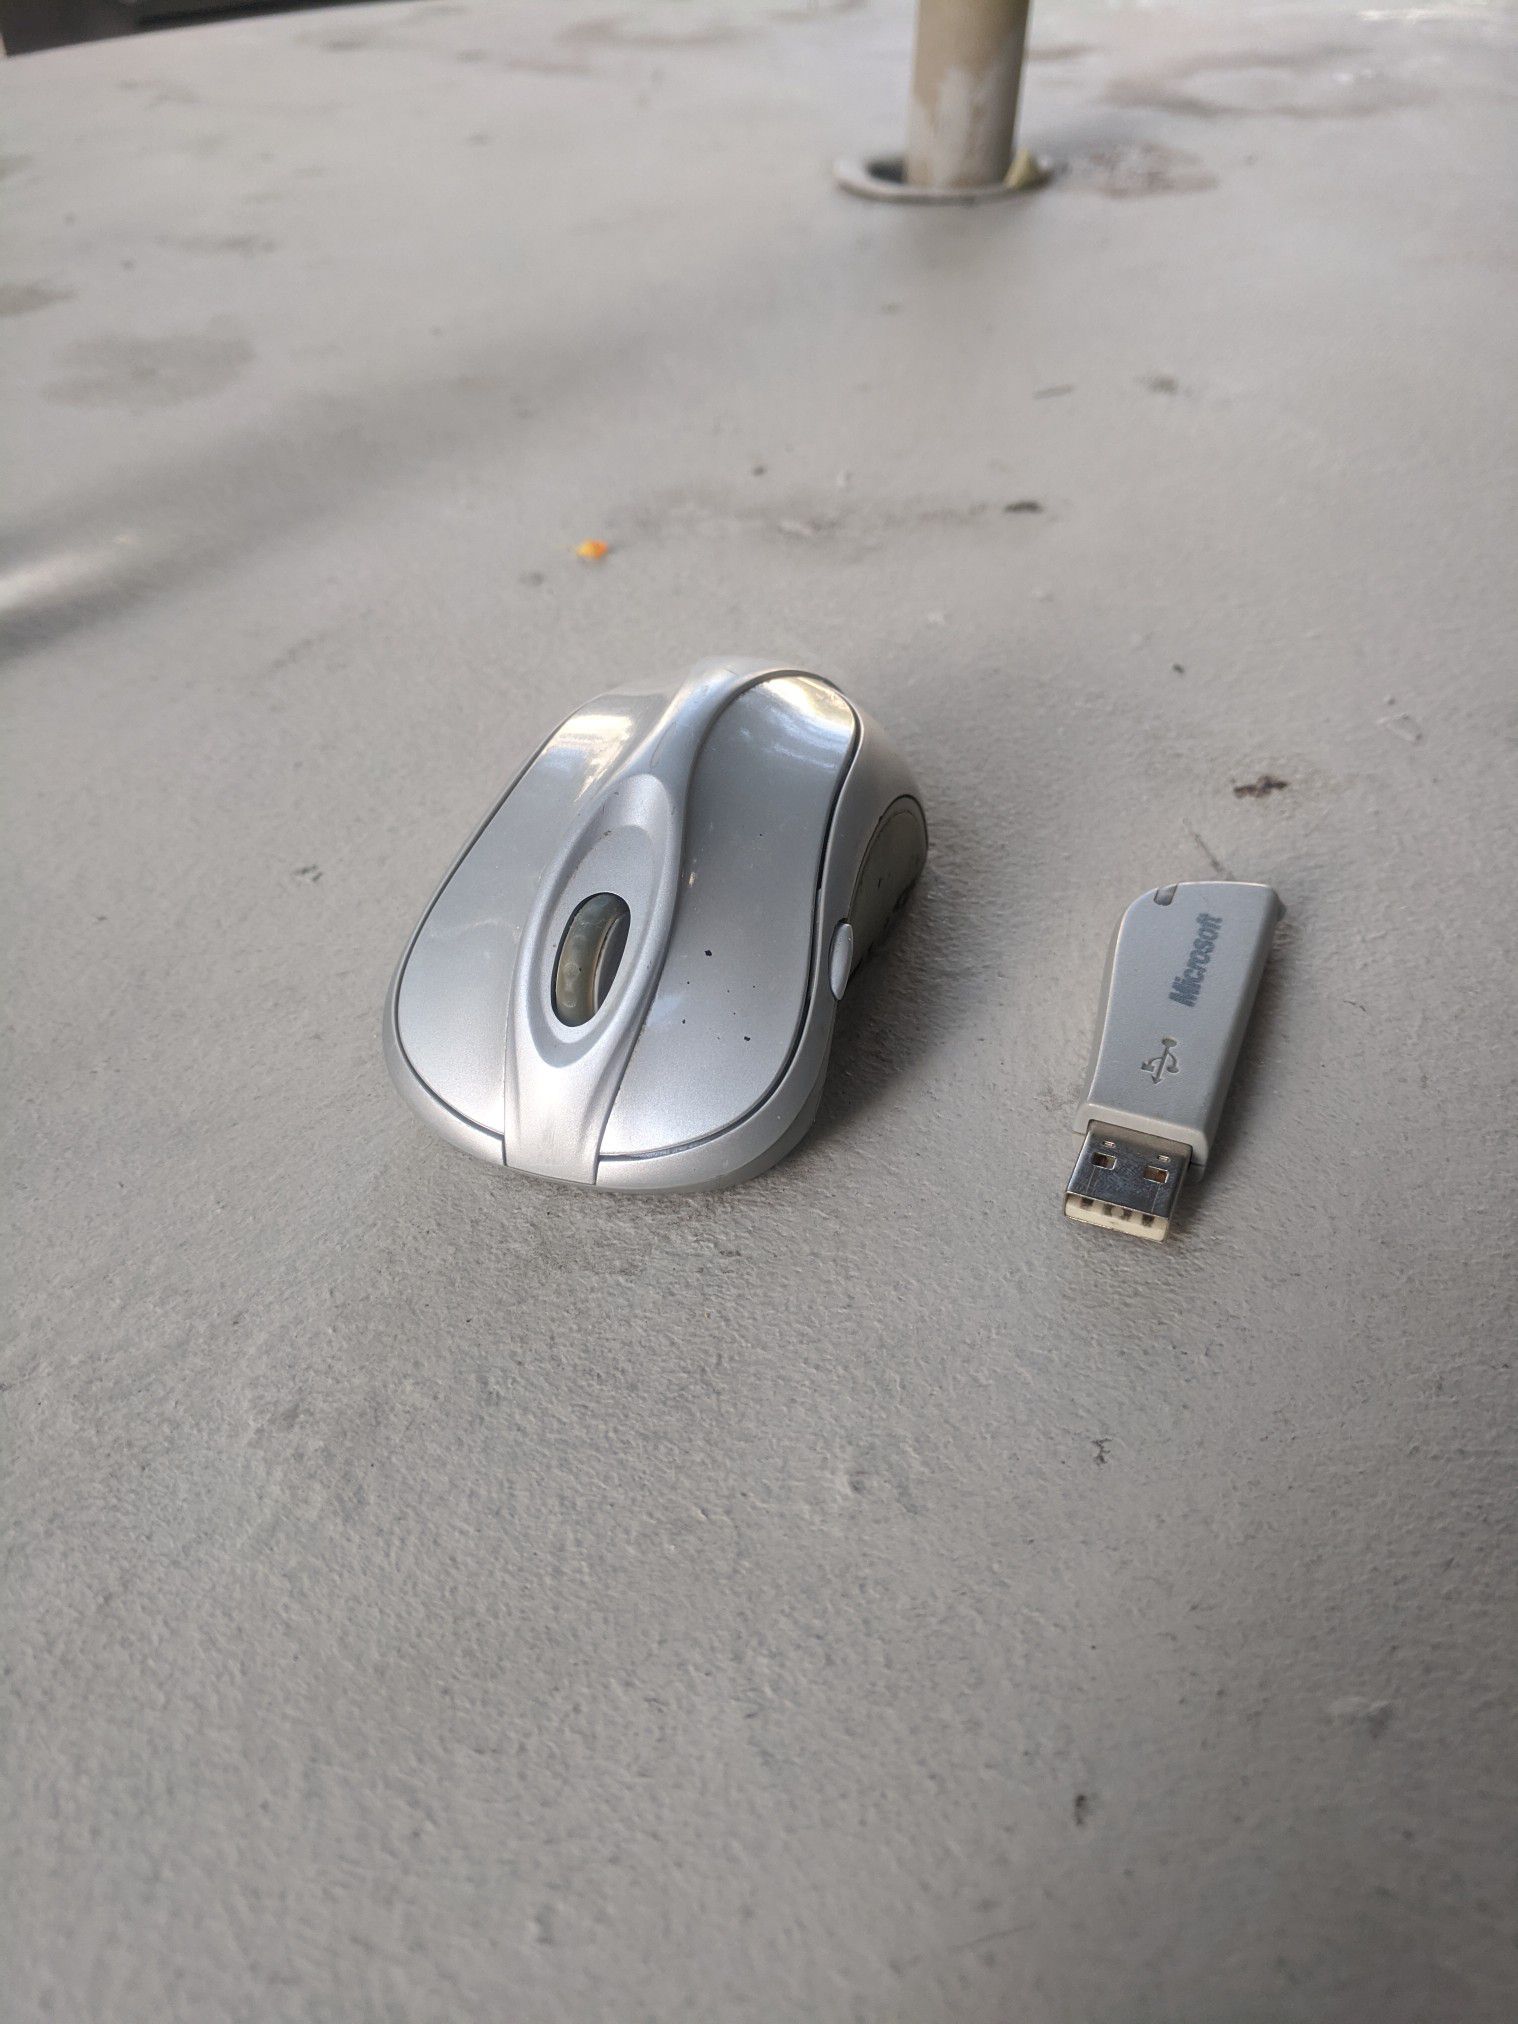 Wireless Microsoft USB mouse